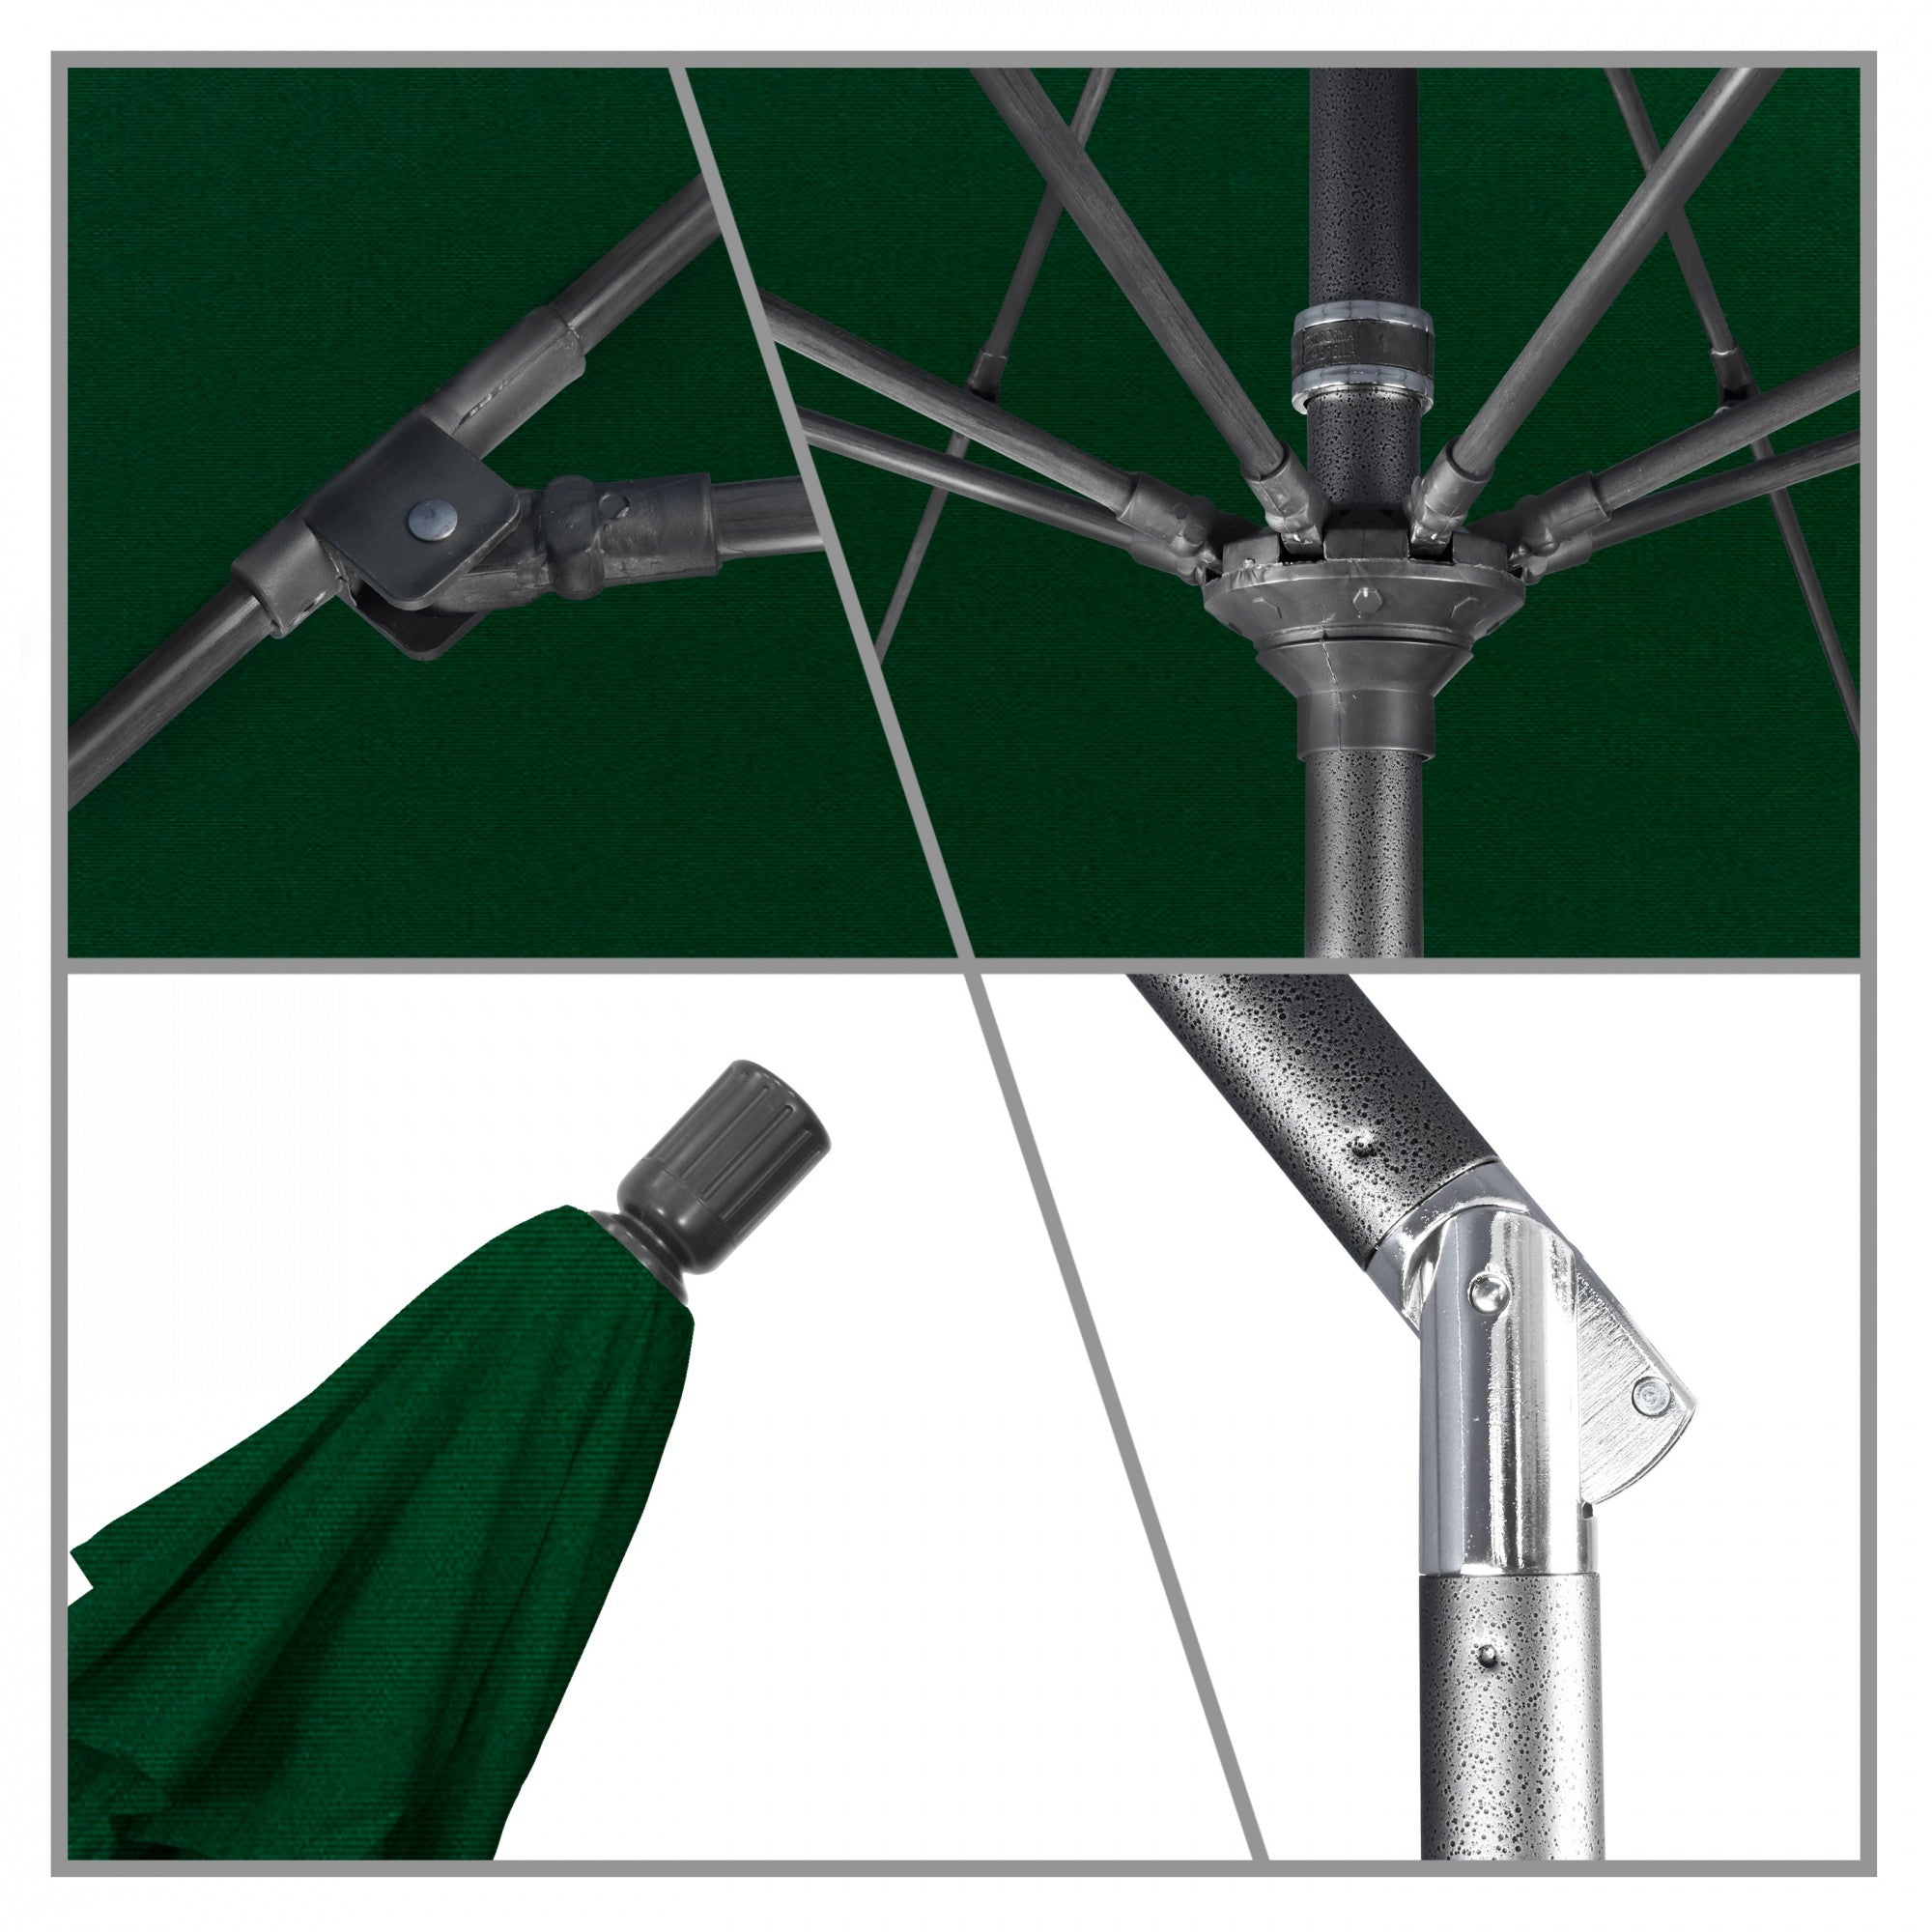 California Umbrella - 9' - Patio Umbrella Umbrella - Aluminum Pole - Hunter Green - Pacifica - GSCUF908010-SA46